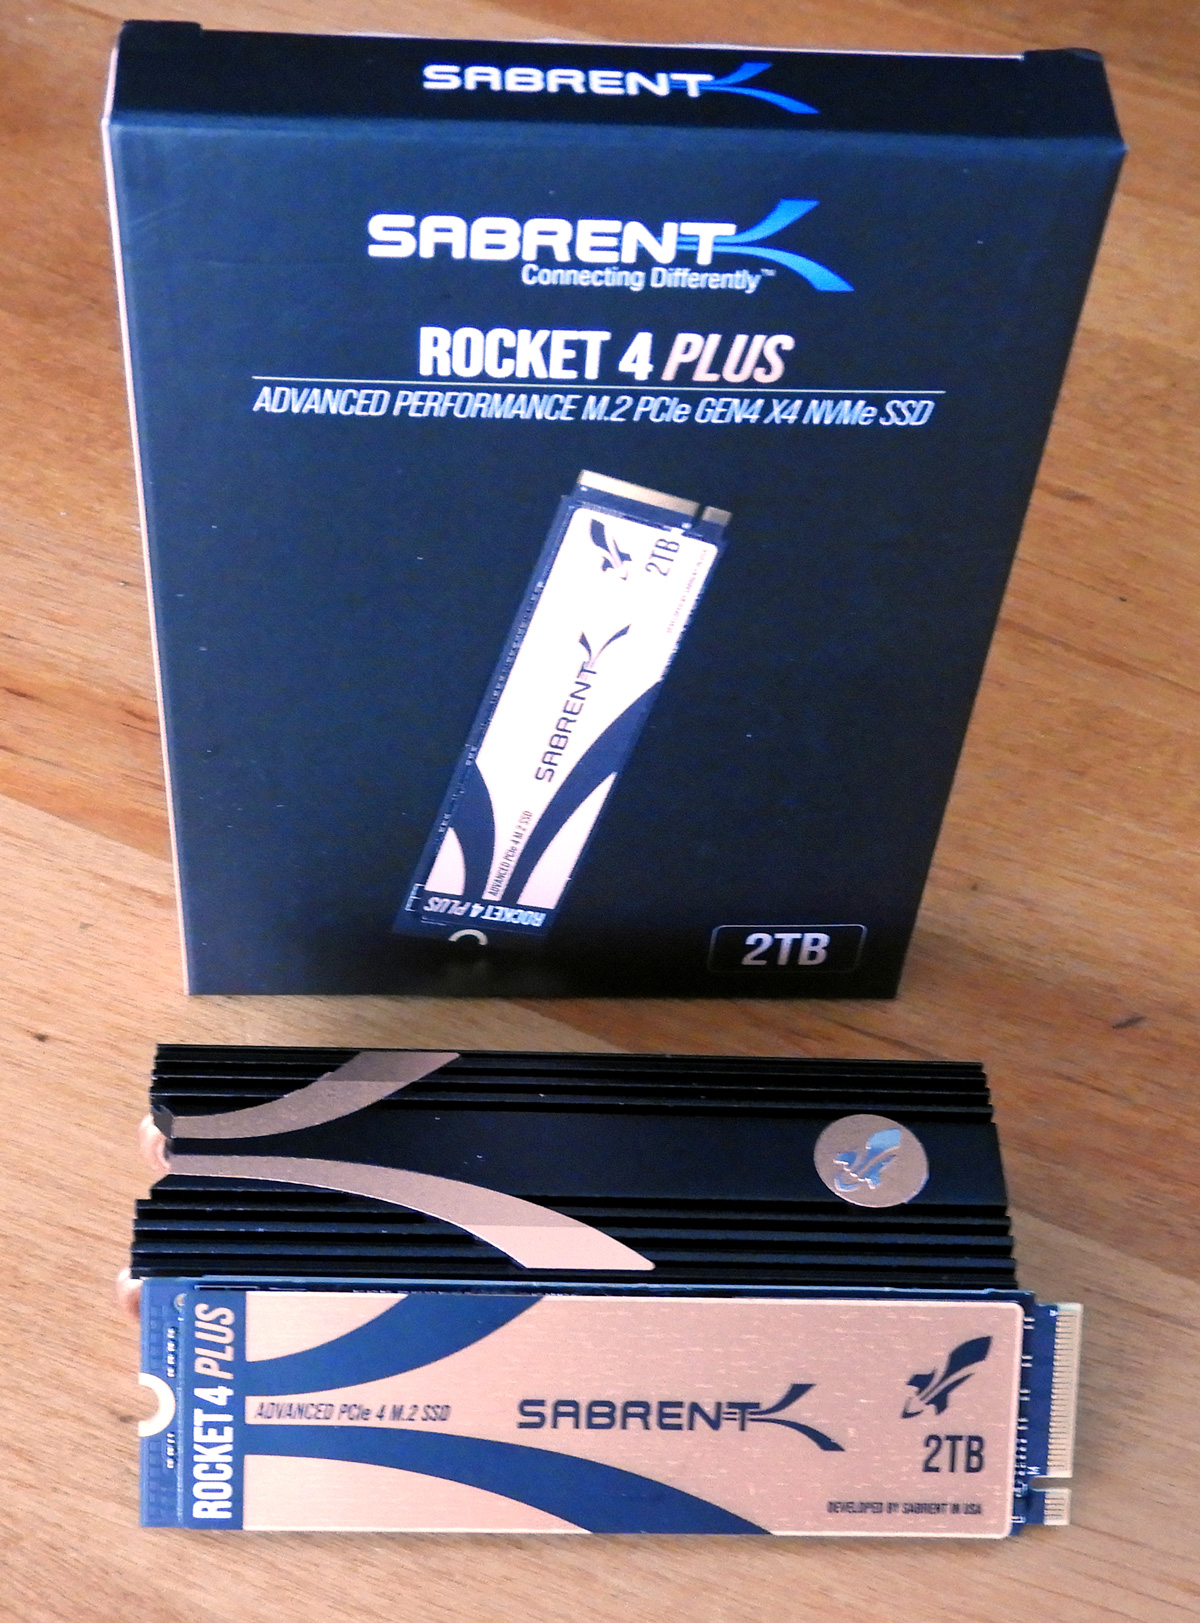 Sabrent Rocket 4 Plus 2TB SSD Review